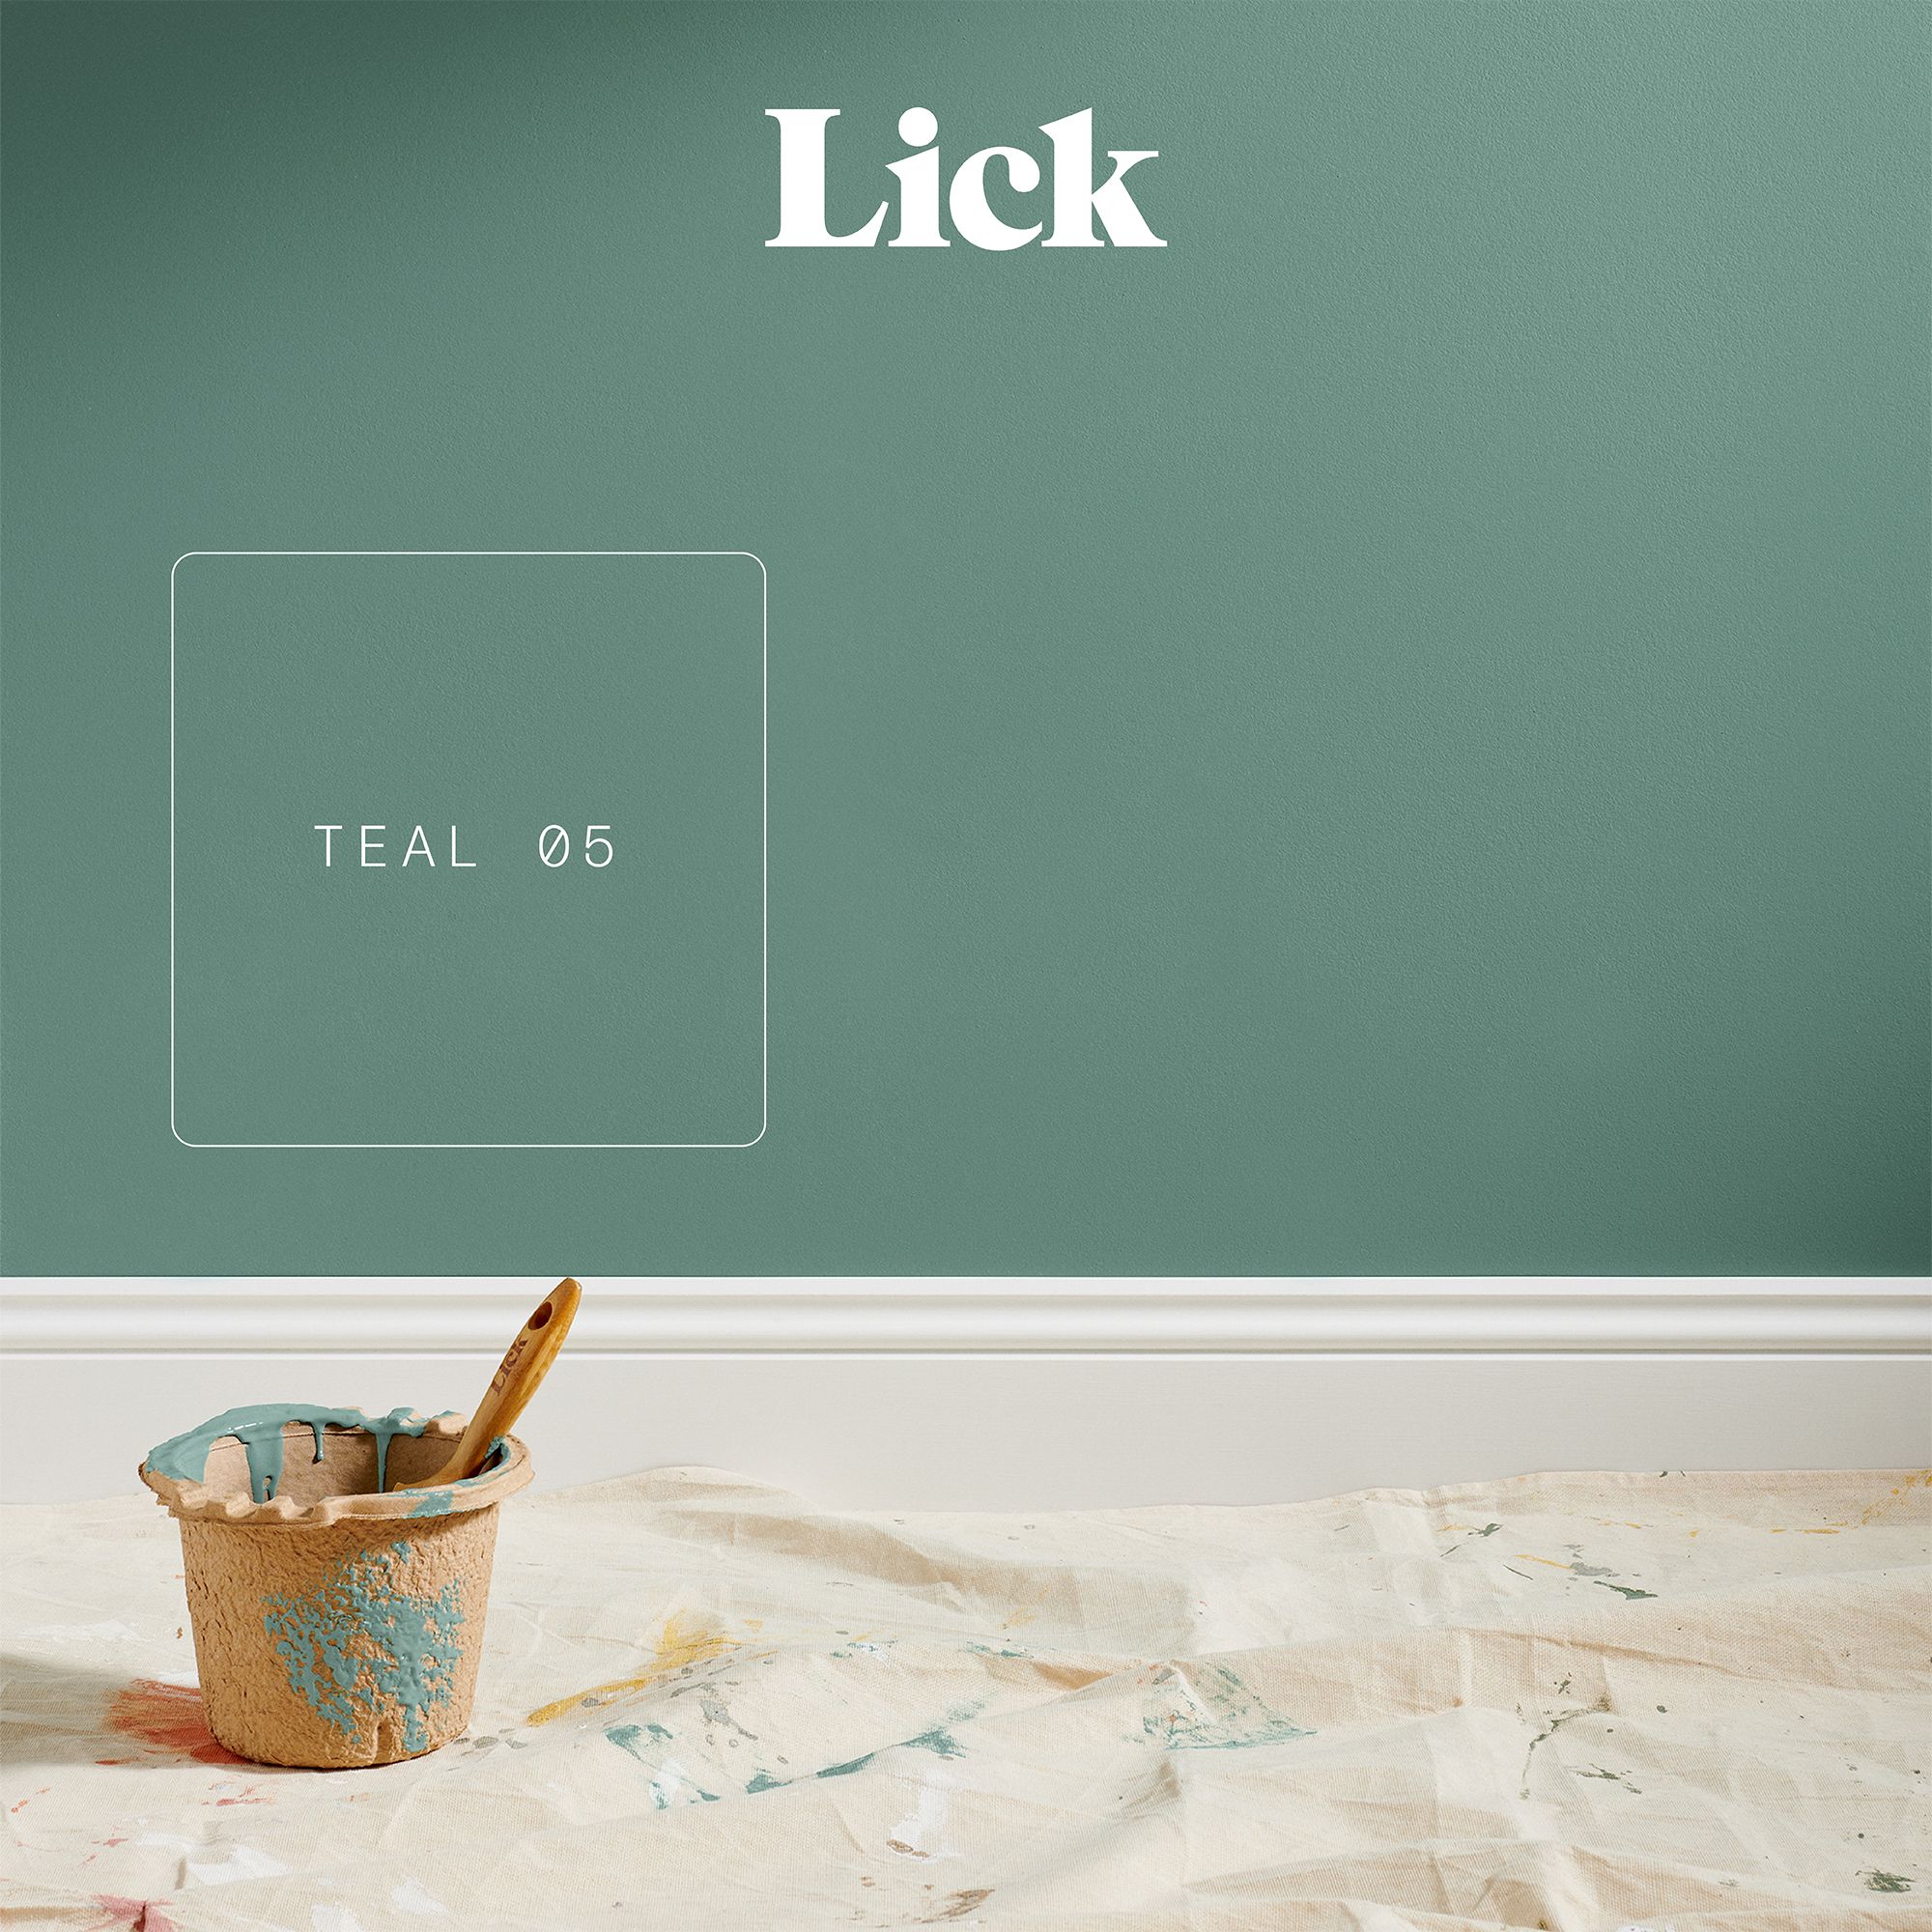 Lick Teal 05 Matt Emulsion paint, 2.5L